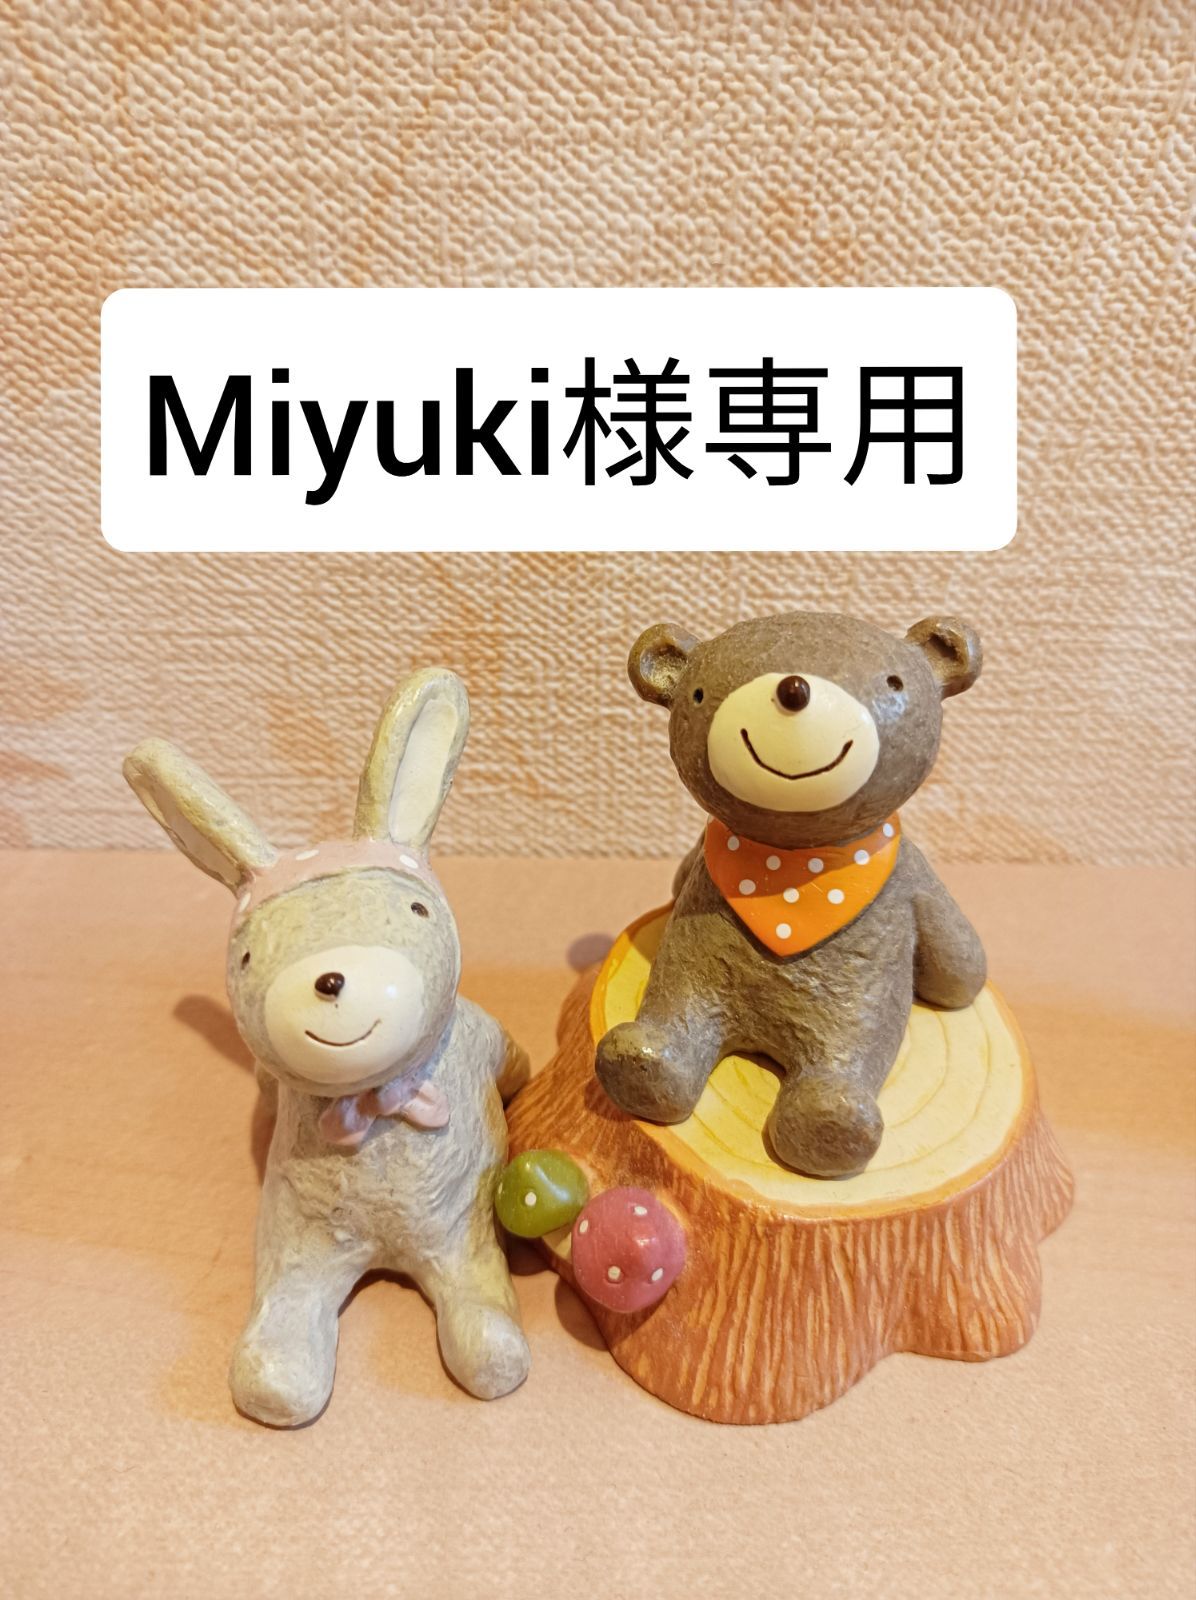 Miyuki様専用 学習教材セット - 月くまの知育教材 - メルカリ